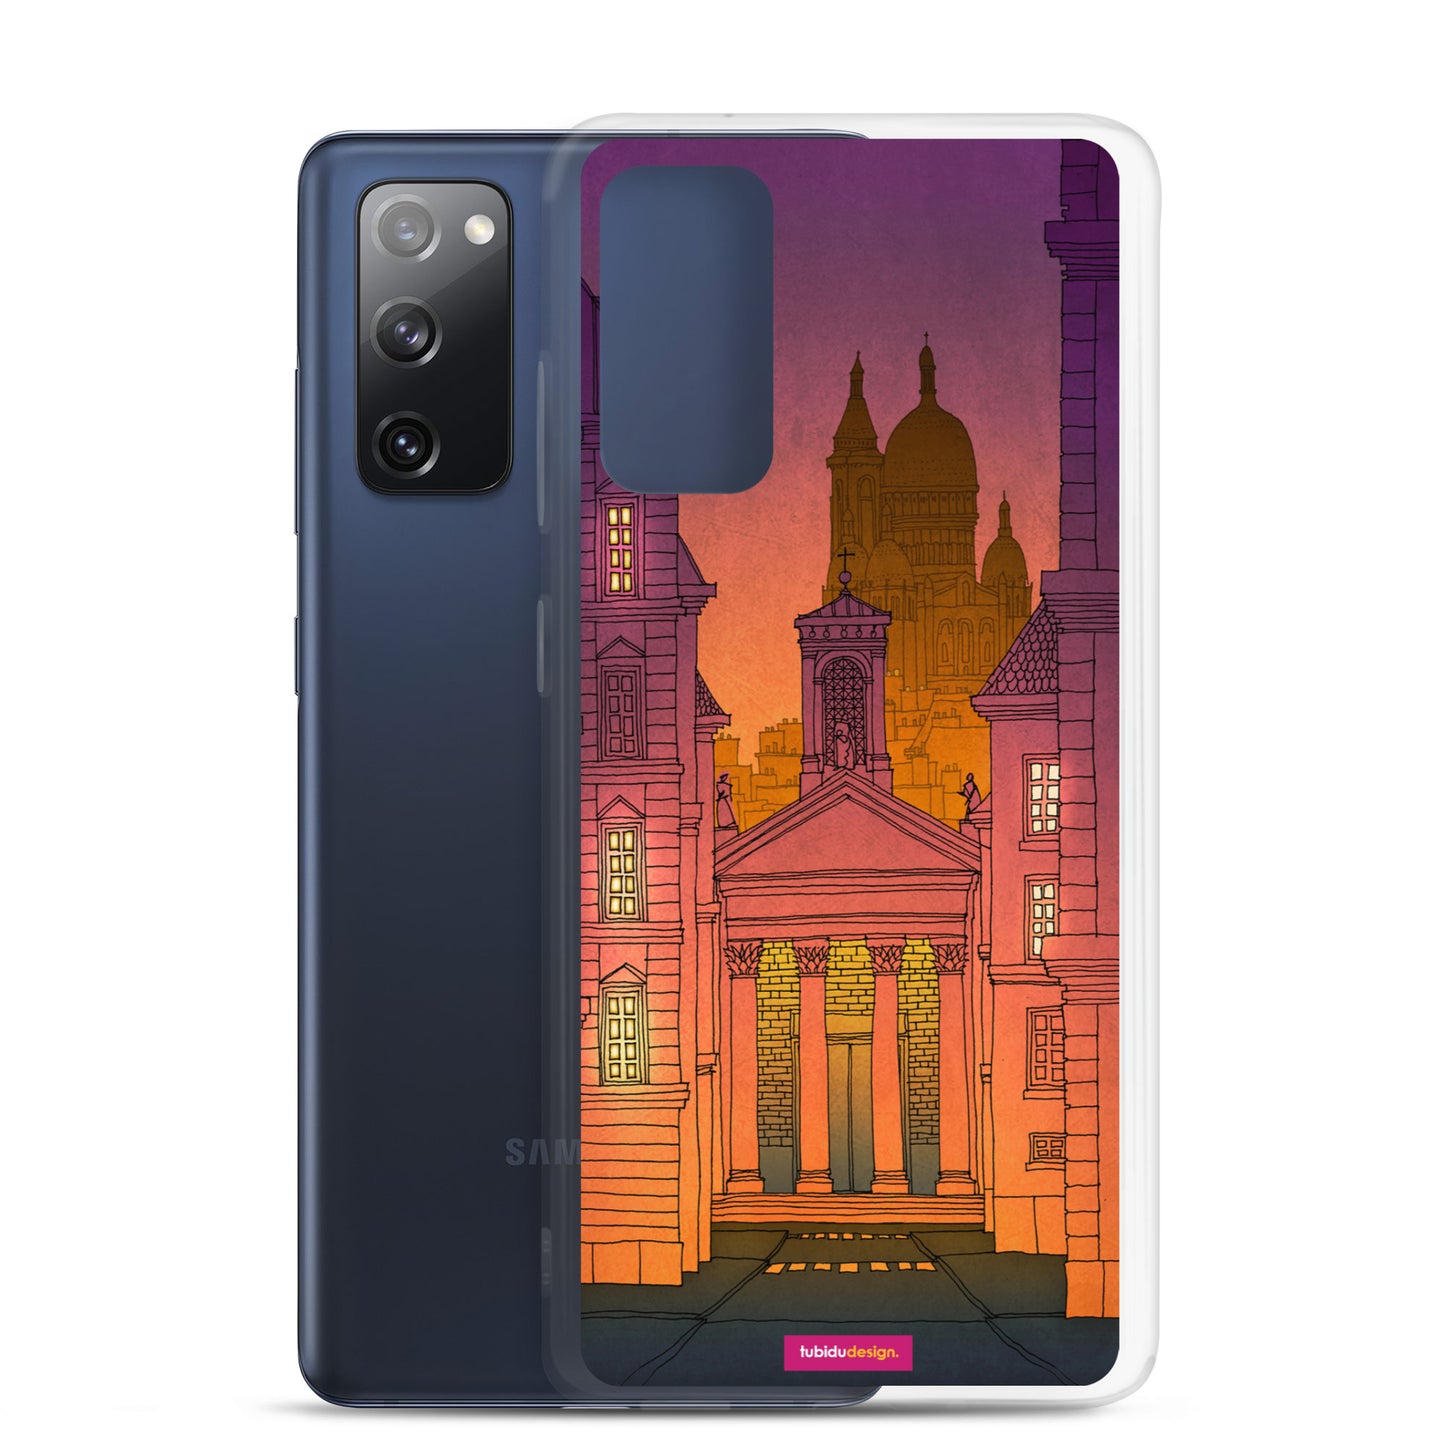 Sacre Coeur (night, purple version)- Illustrated Samsung Phone Case